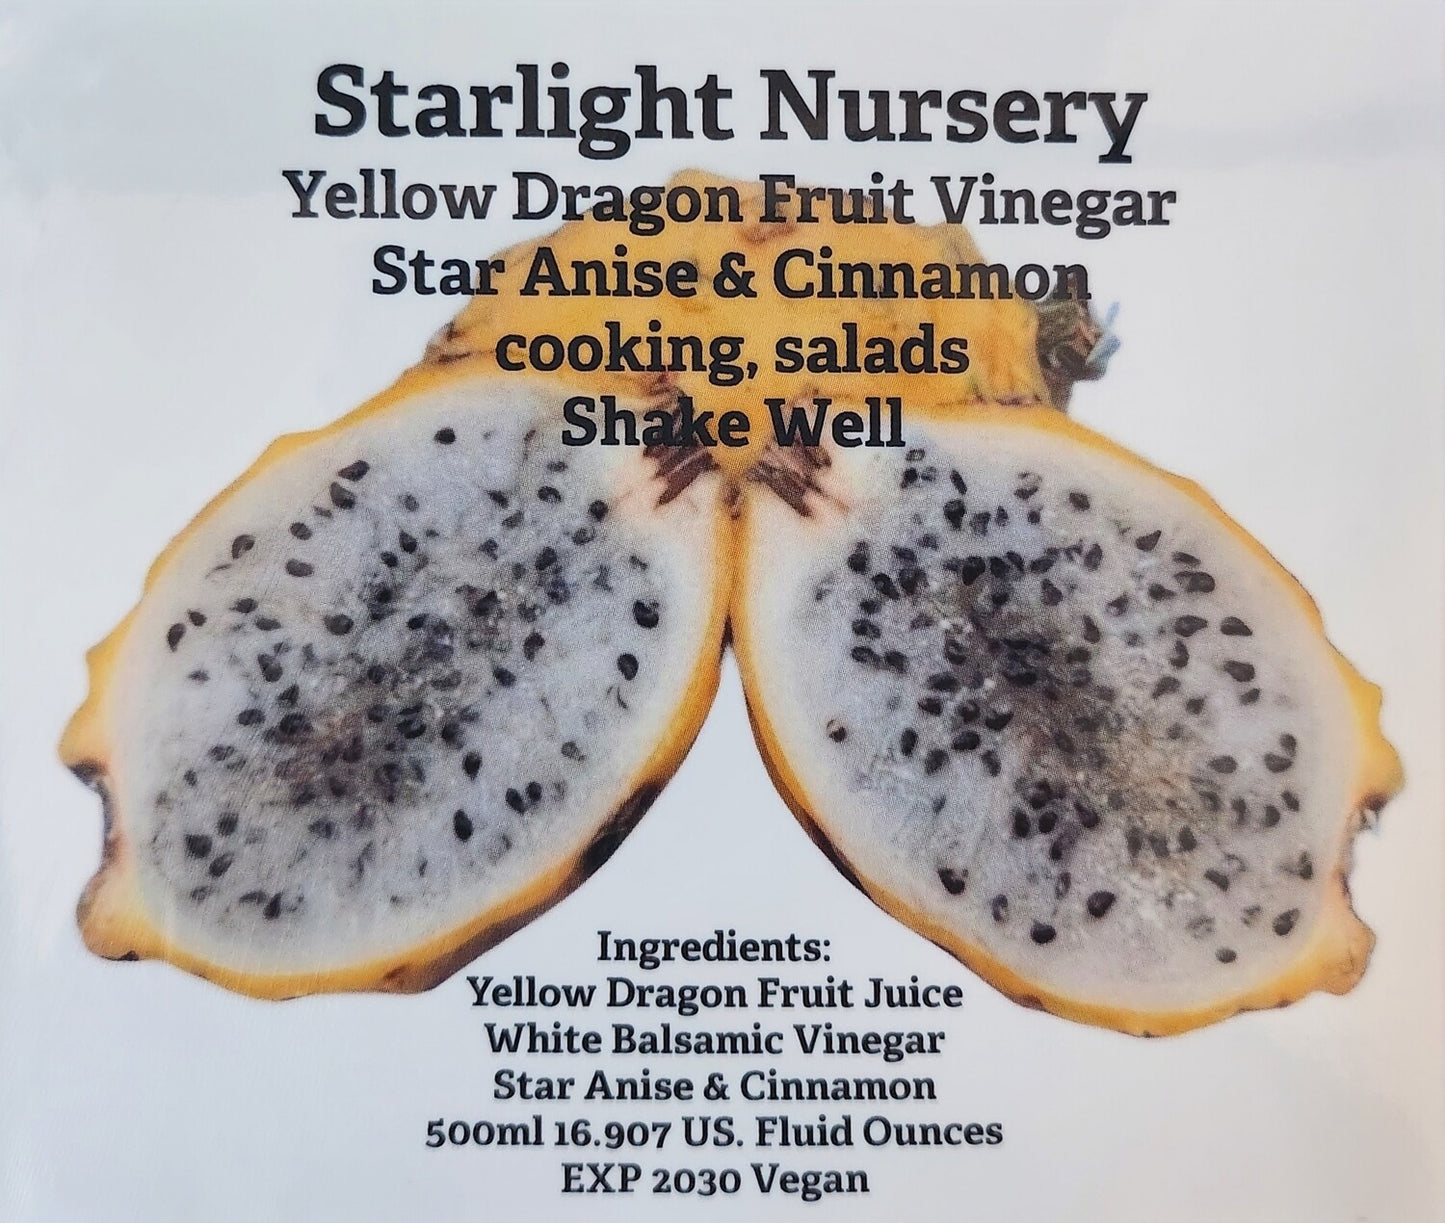 Yellow Dragon Fruit Vinegar Two Bottles Two Flavors - Starlight Nursery 